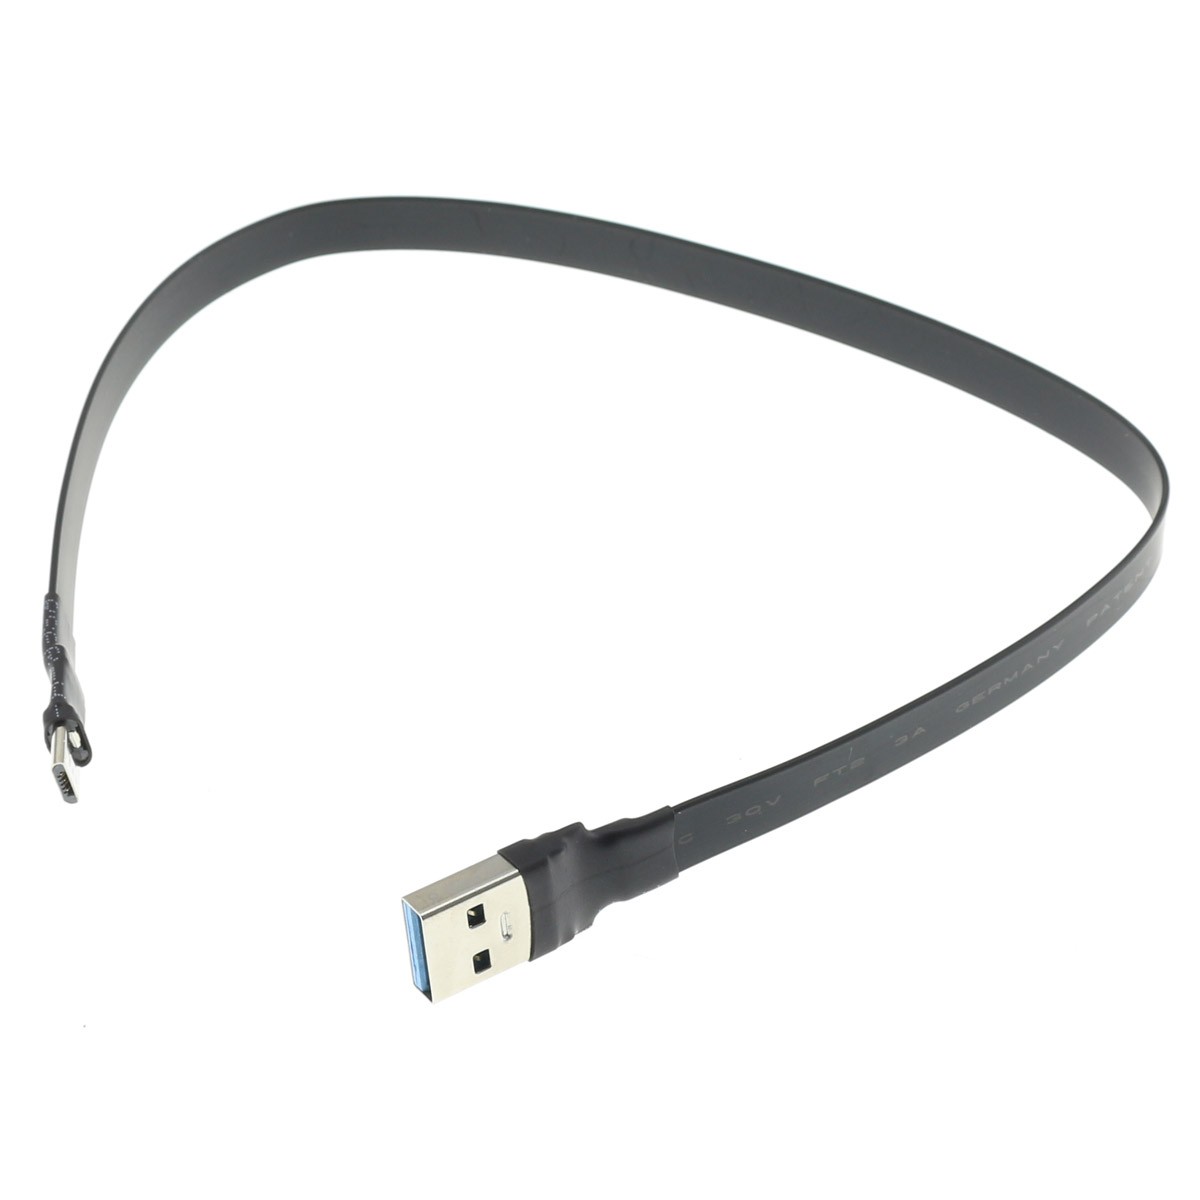 Cable Length: 30cm Cables 0.3M/1FT USB 2.0 Extension Cable Type A Male to Micro 5 Pin Male Transparent Blue Extended AM V8 50cm/100cm/150cm/300cm/500cm